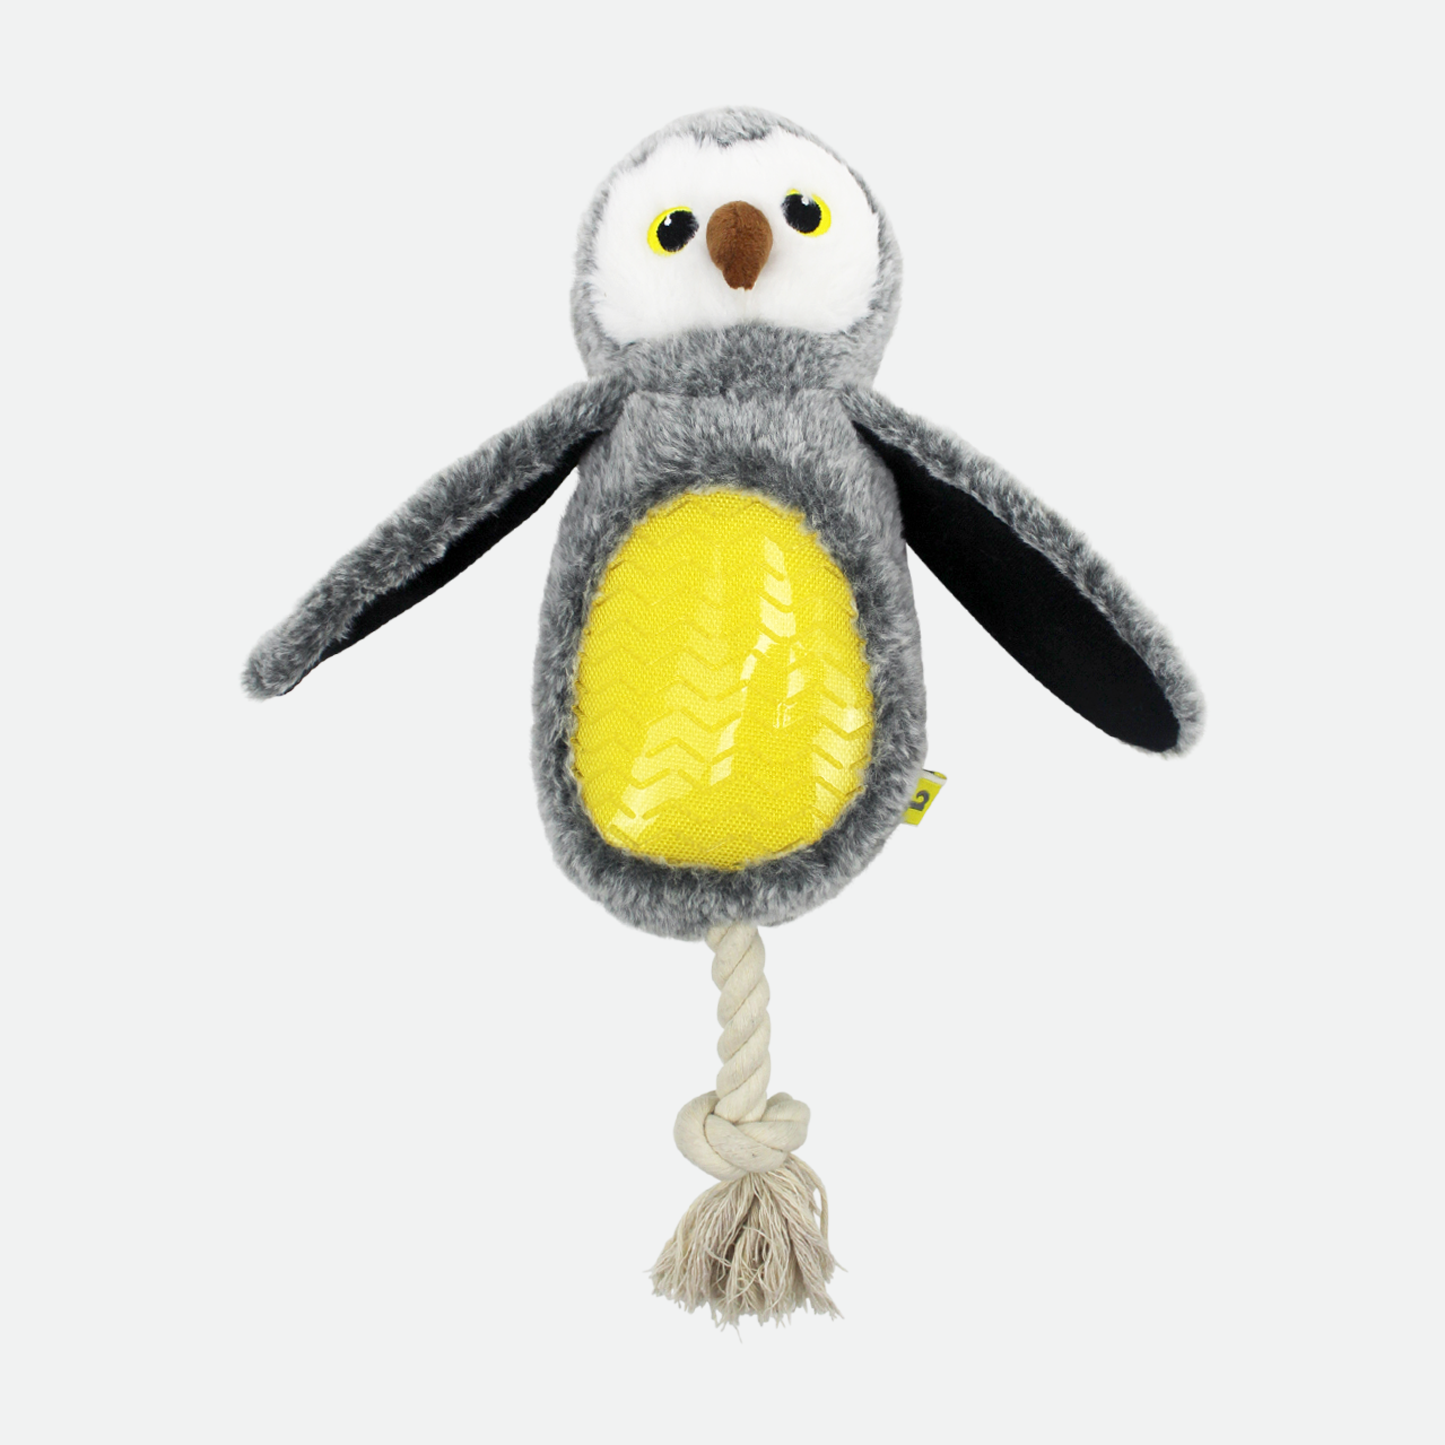 Plush toy for dog, owl style